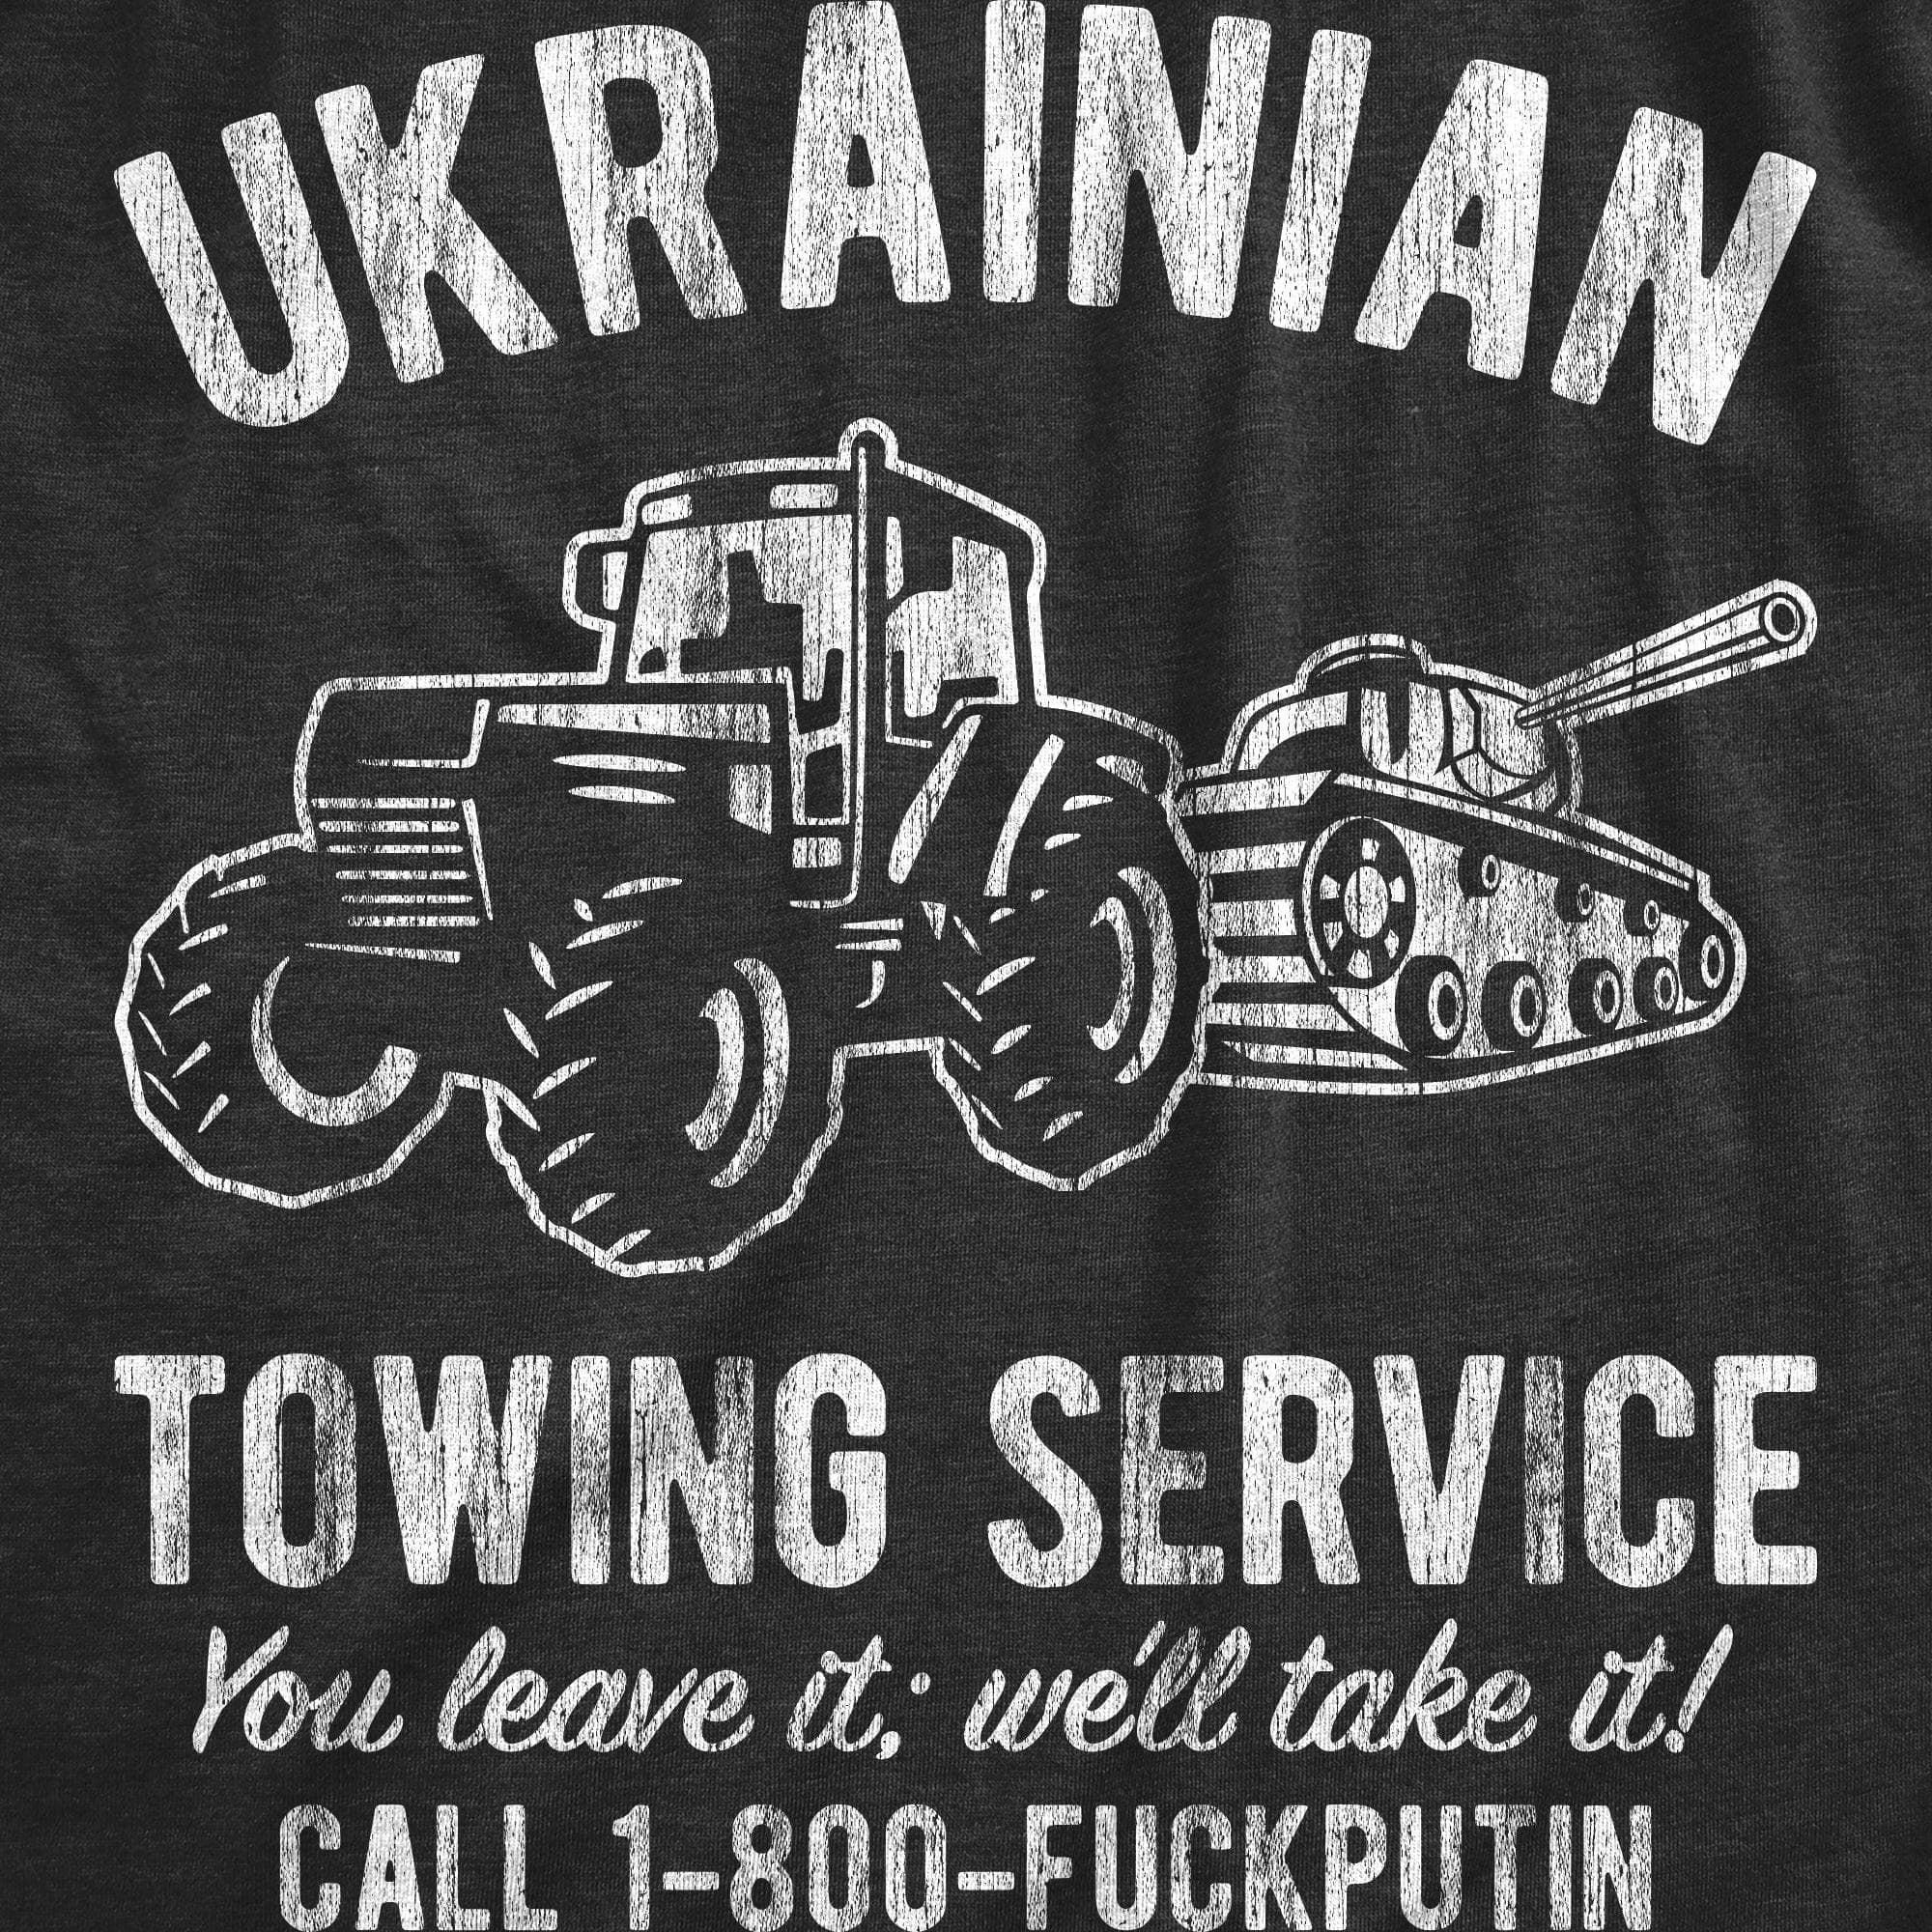 Ukrainian Towing Service Men's Tshirt  -  Crazy Dog T-Shirts